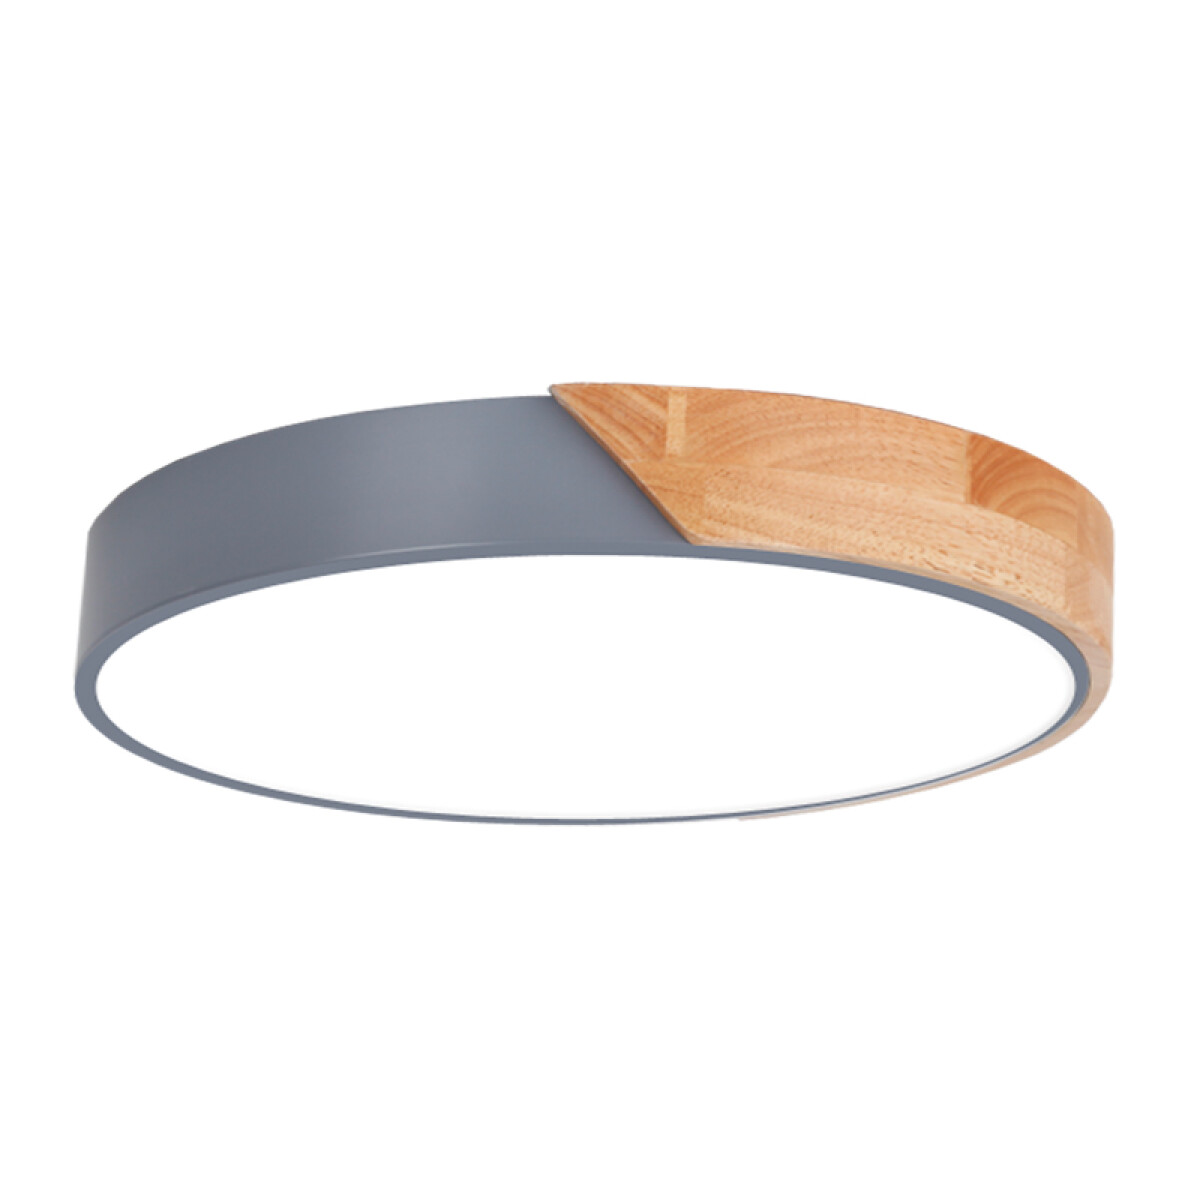 Plafón led de diseño circular en madera y aluminio gris mate 20w - Luz Cálida 